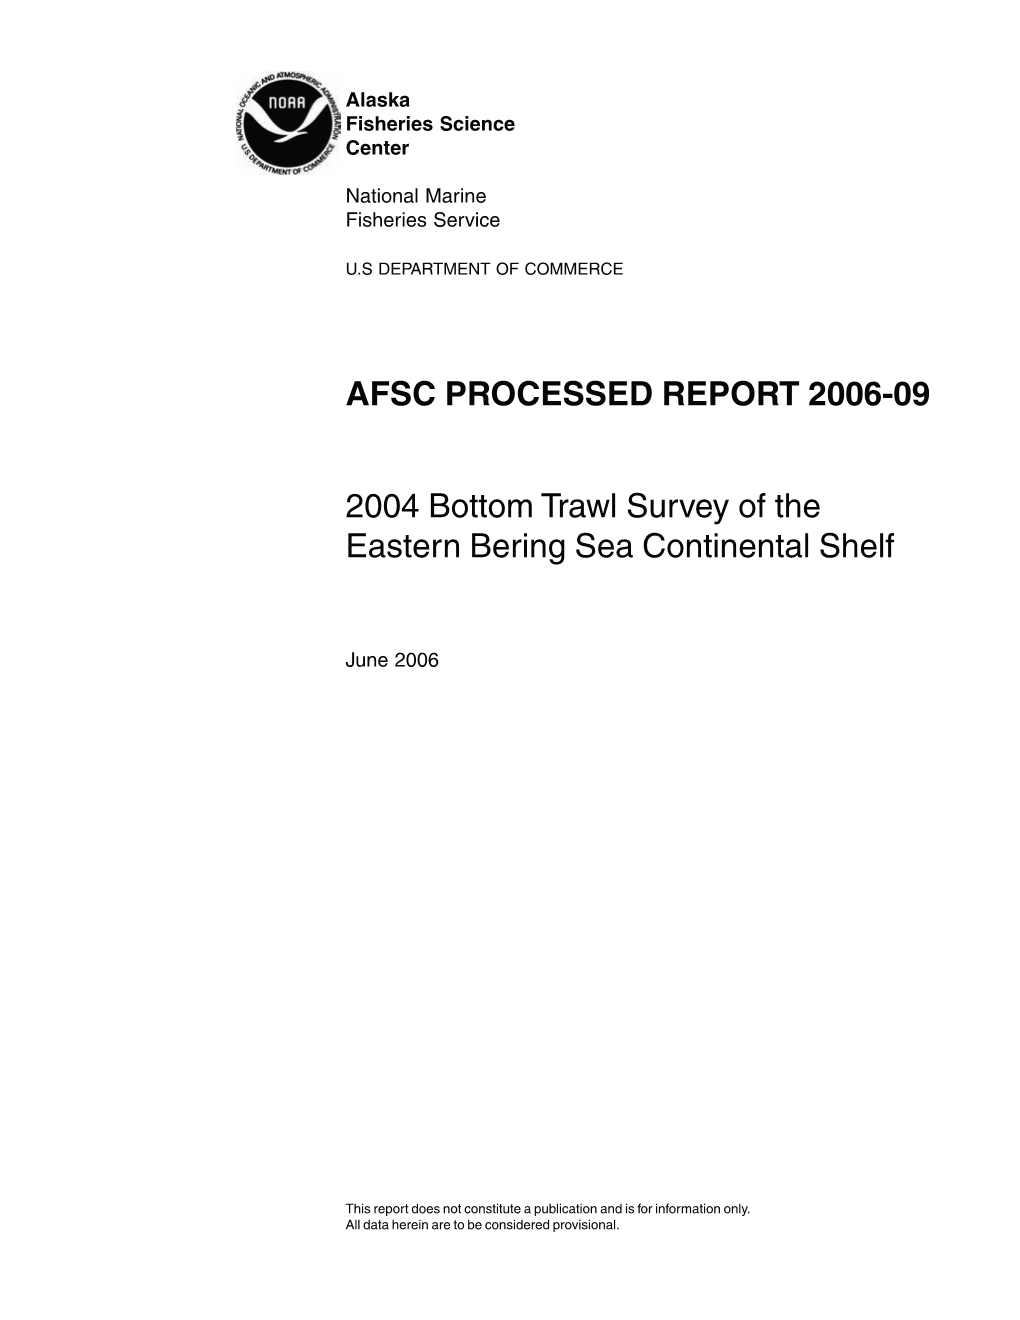 2004 Bottom Trawl Survey of the Eastern Bering Sea Continental Shelf